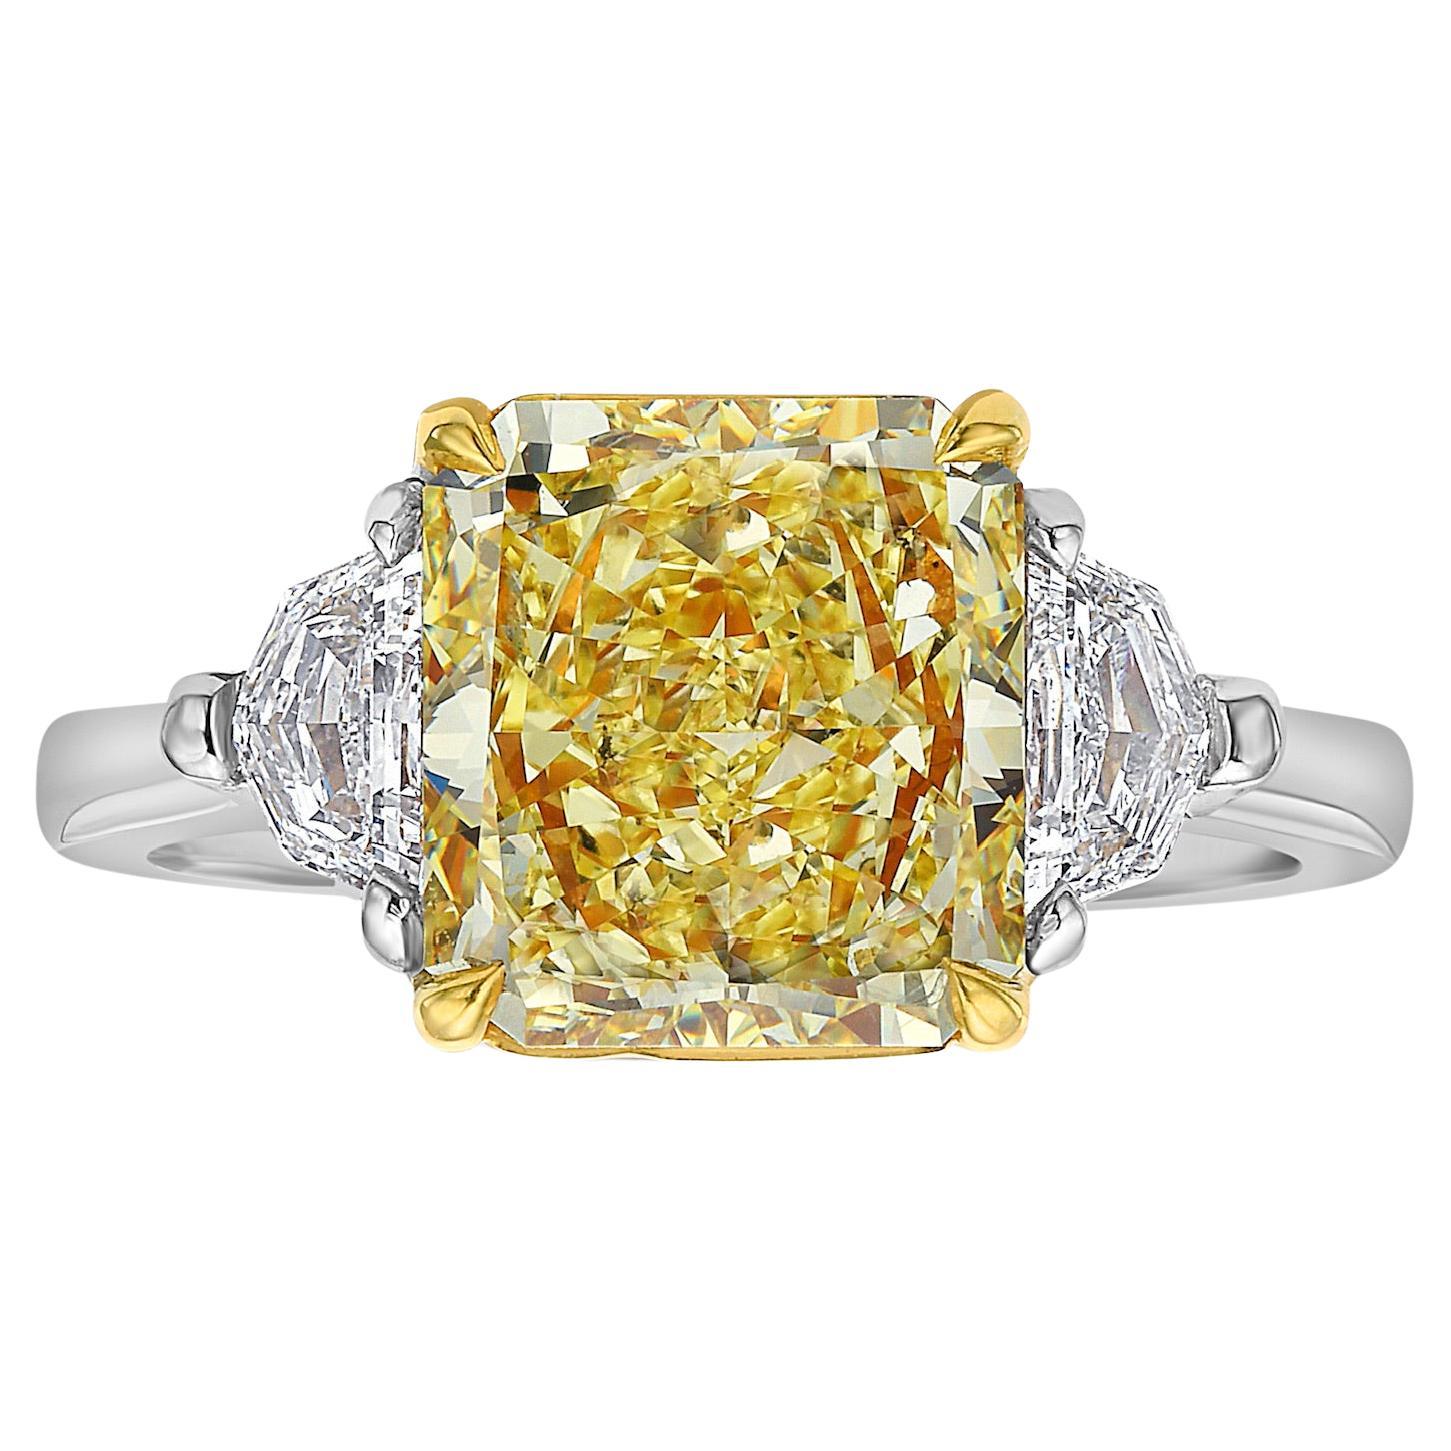 3 Carat Fancy Intense Yellow Radiant Diamond Ring